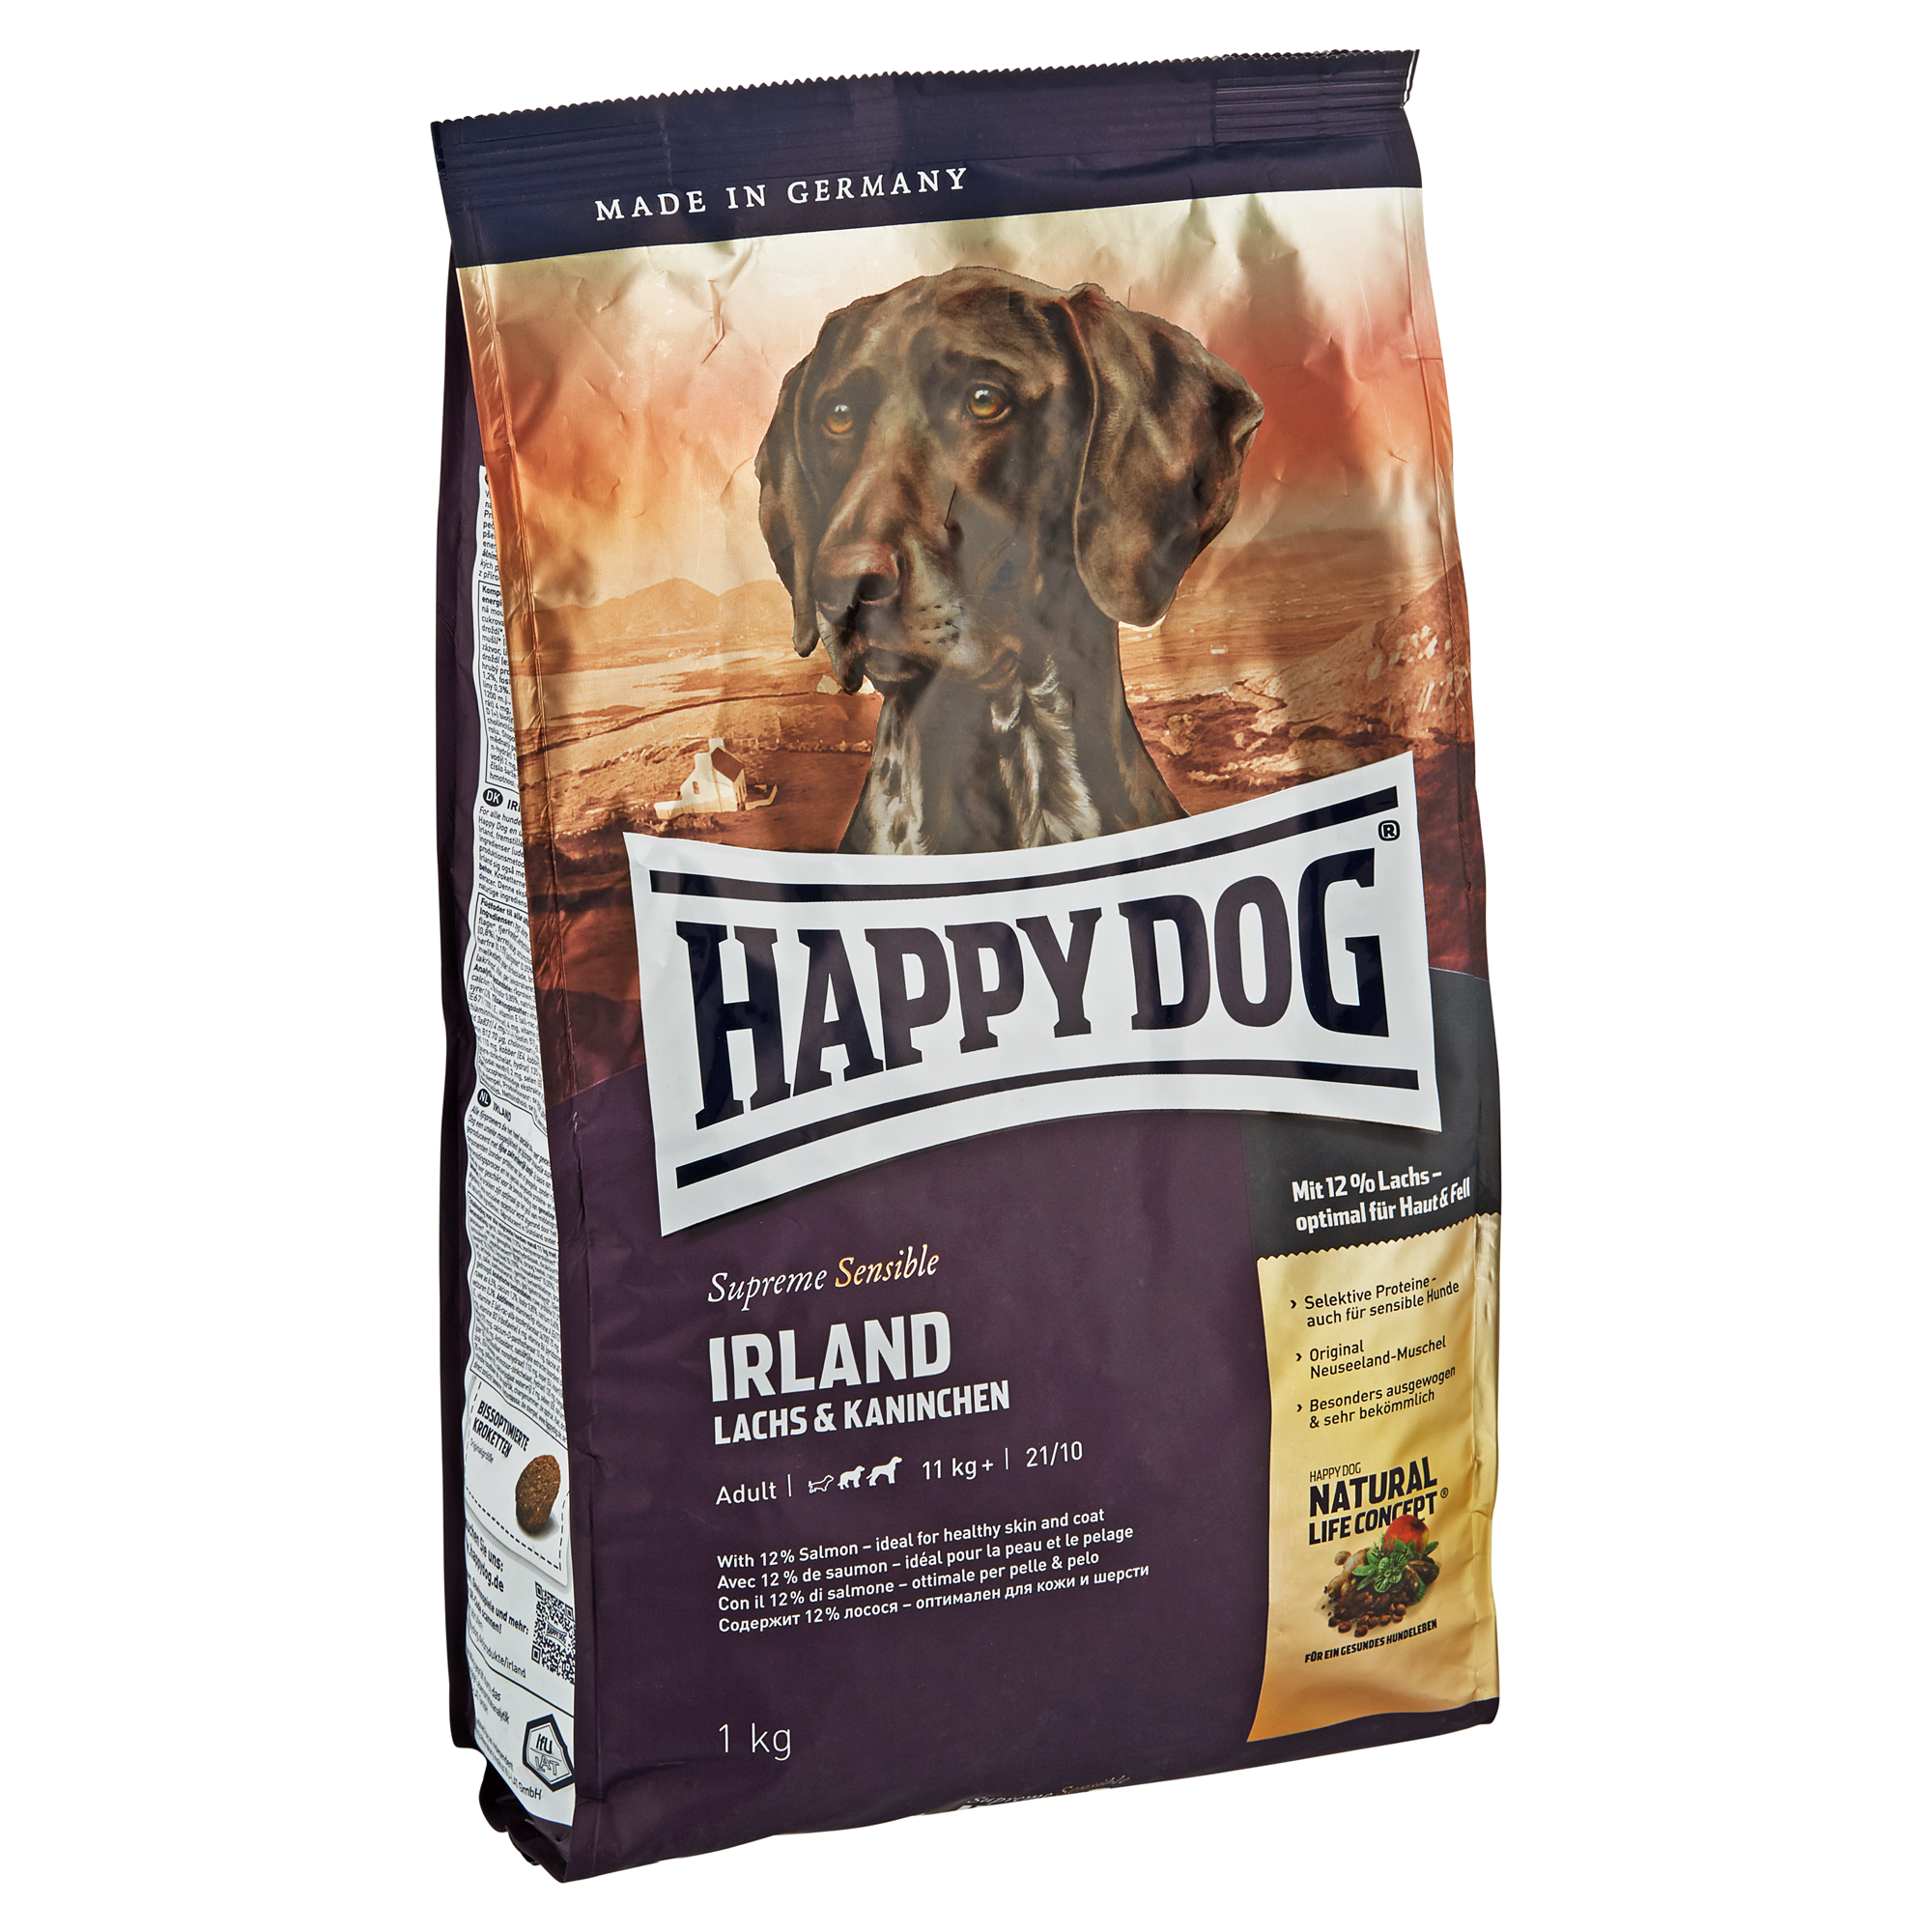 Hundetrockenfutter "Supreme Sensible" Adult Irland mit Lachs/Kaninchen 1 kg + product picture